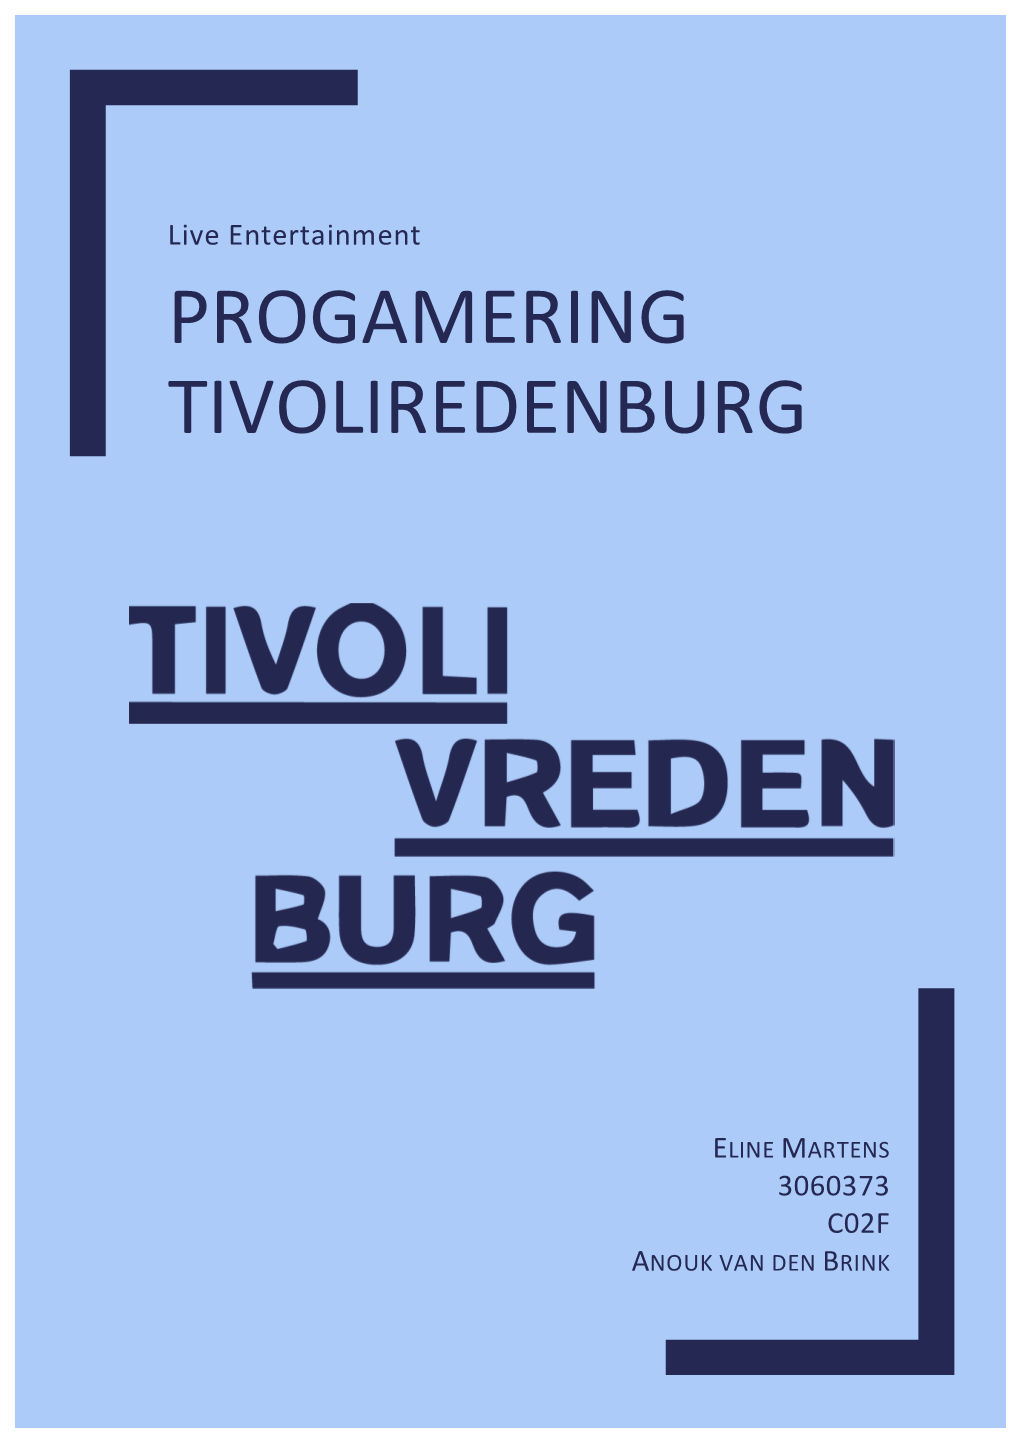 Progamering Tivoliredenburg